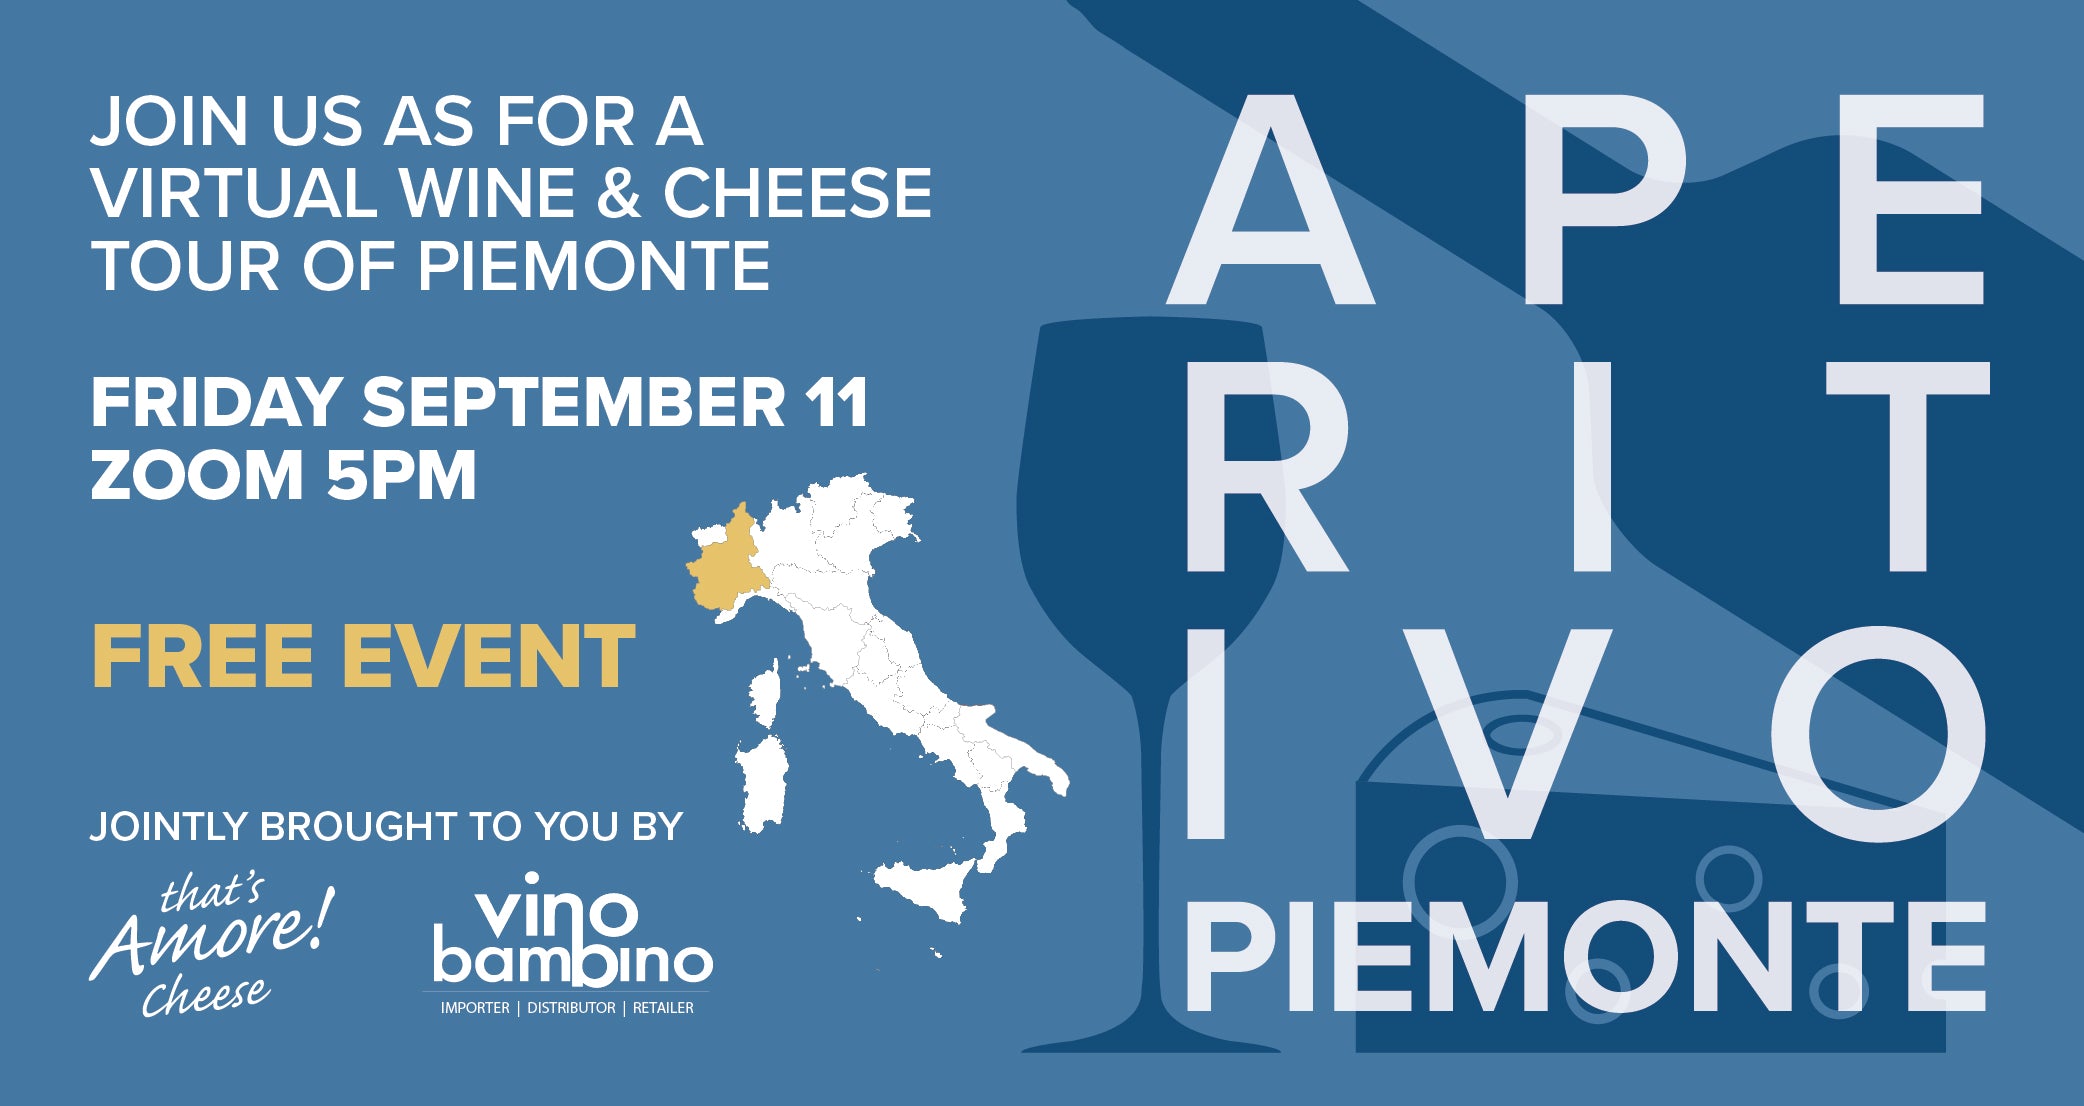 APERITIVO PIEMONTE - Join us on a food & wine exclusive to Barolo region in Piemonte!